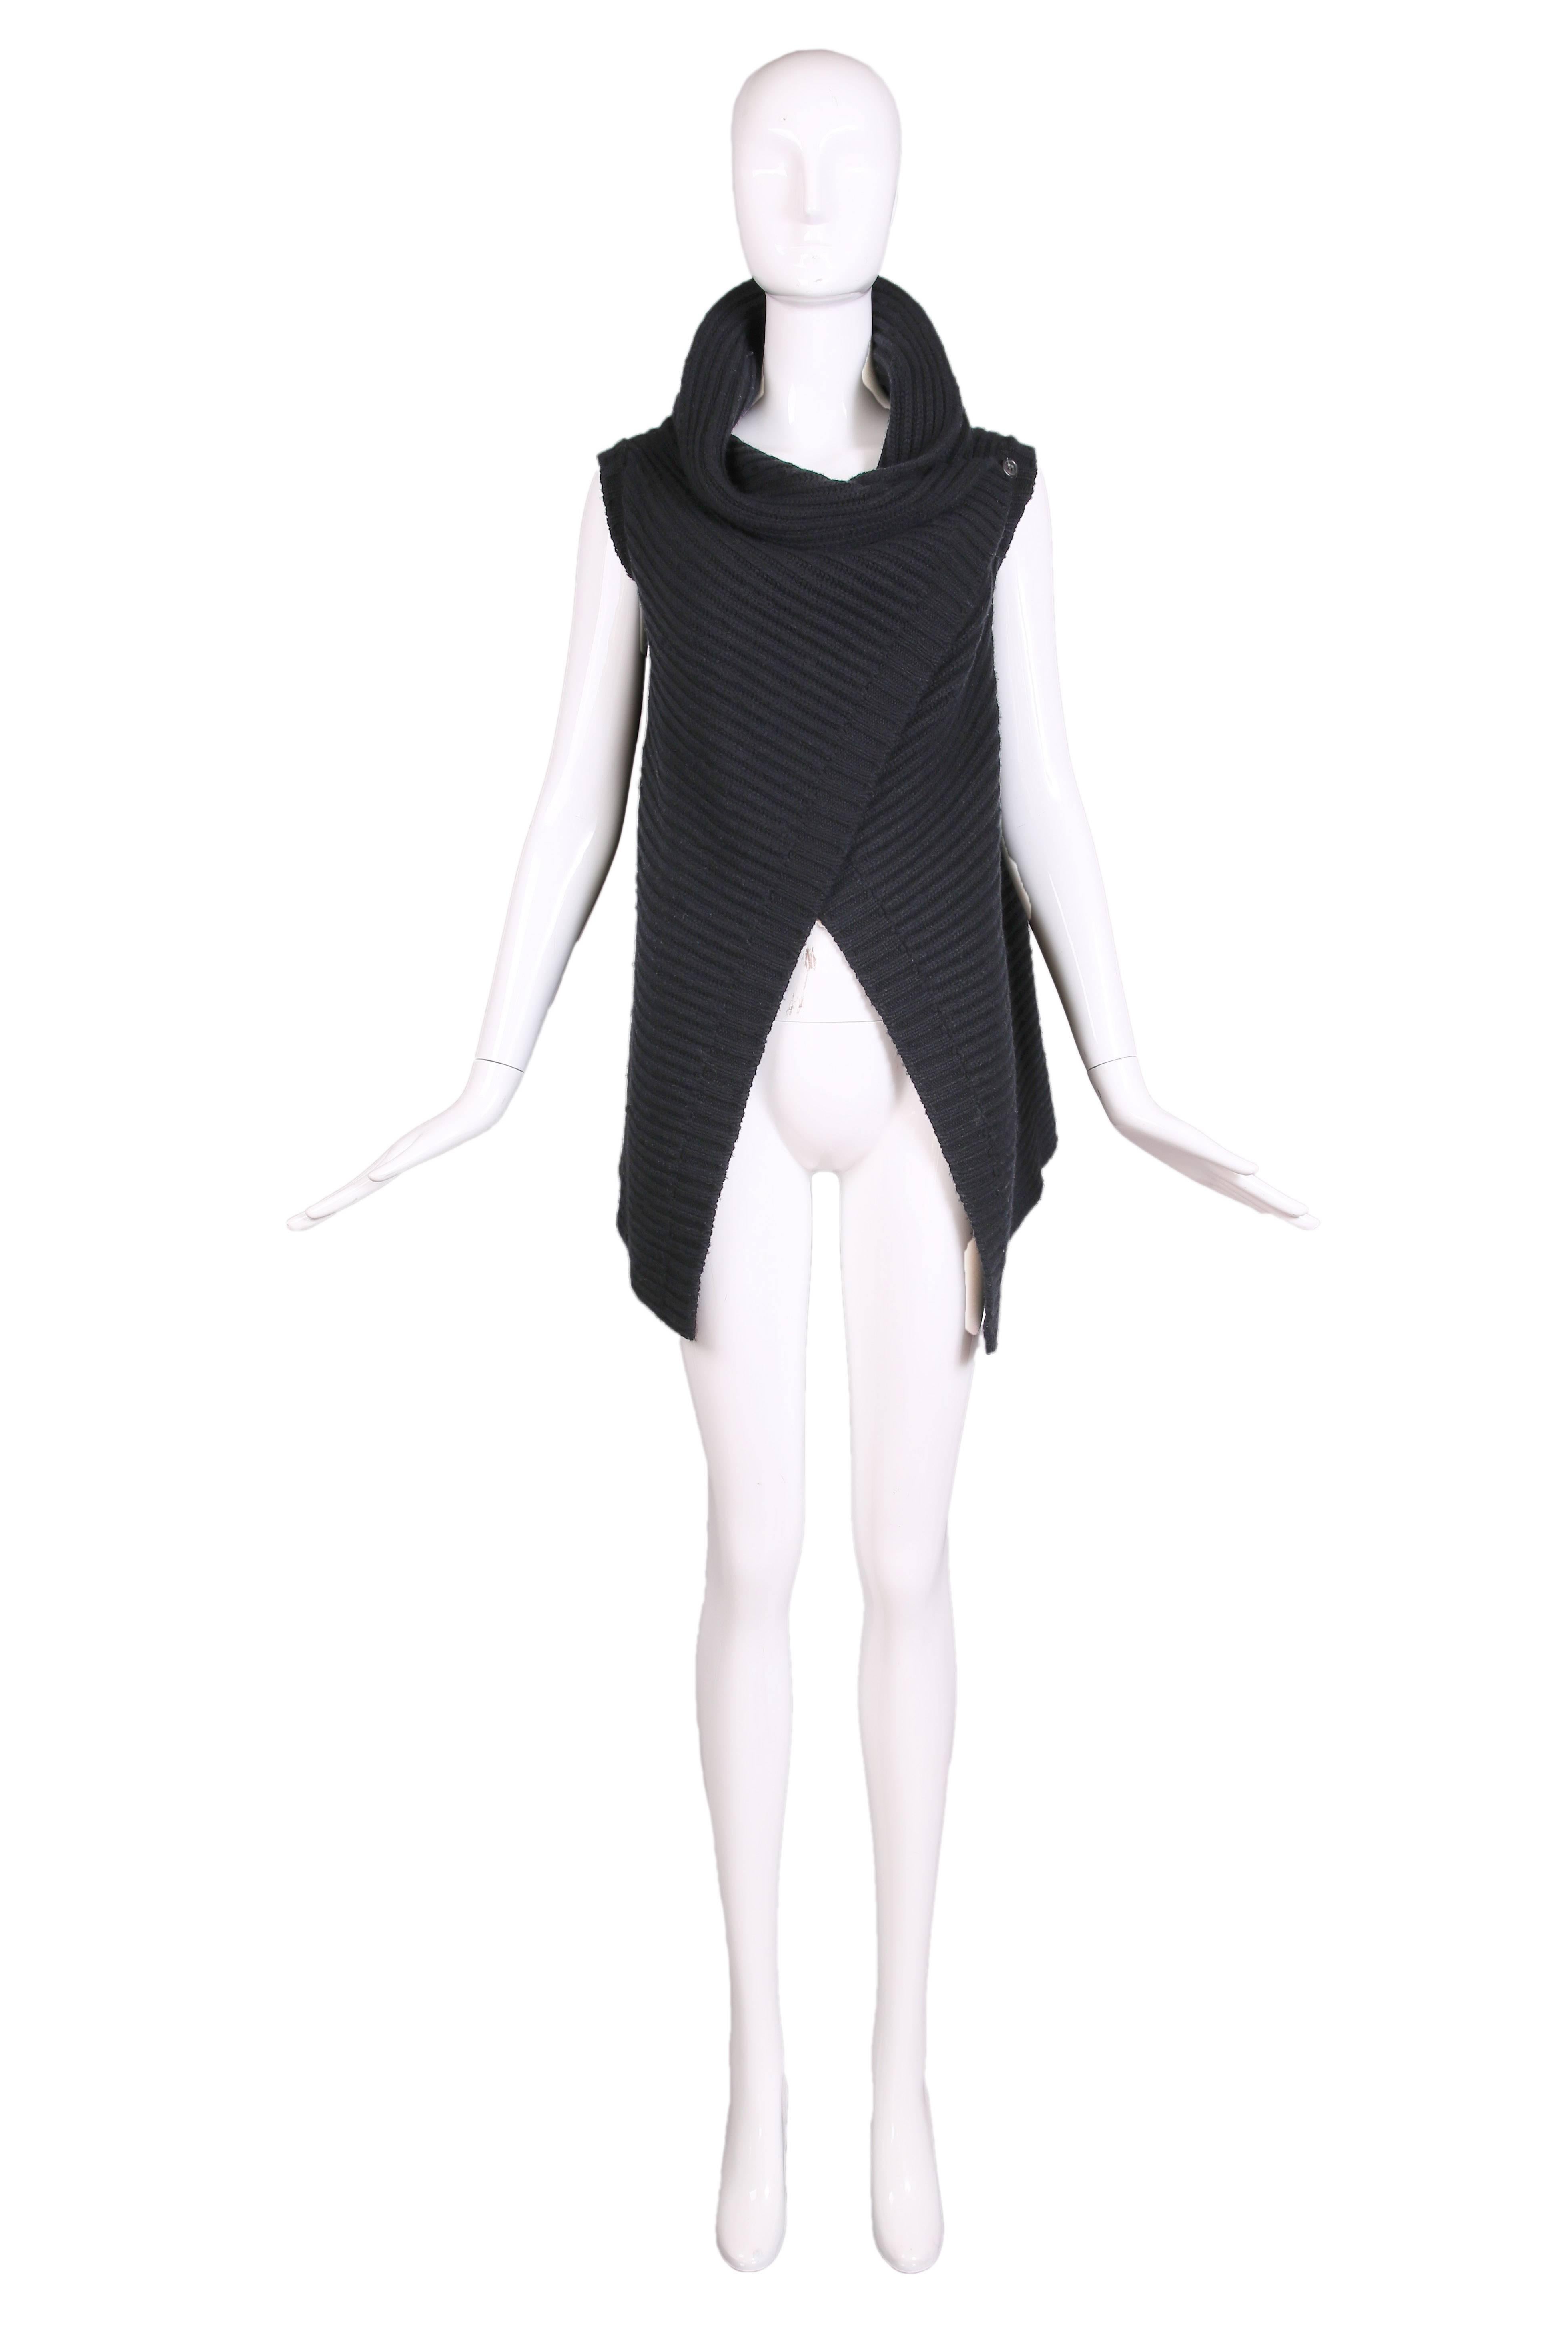 Jil Sander black cable knit wrap vest with oversized cowl neck collar and button closure at the left shoulder.  Excellent condition
Measurements -
Shoulder: 17"
Length: .5"31
Size: Small